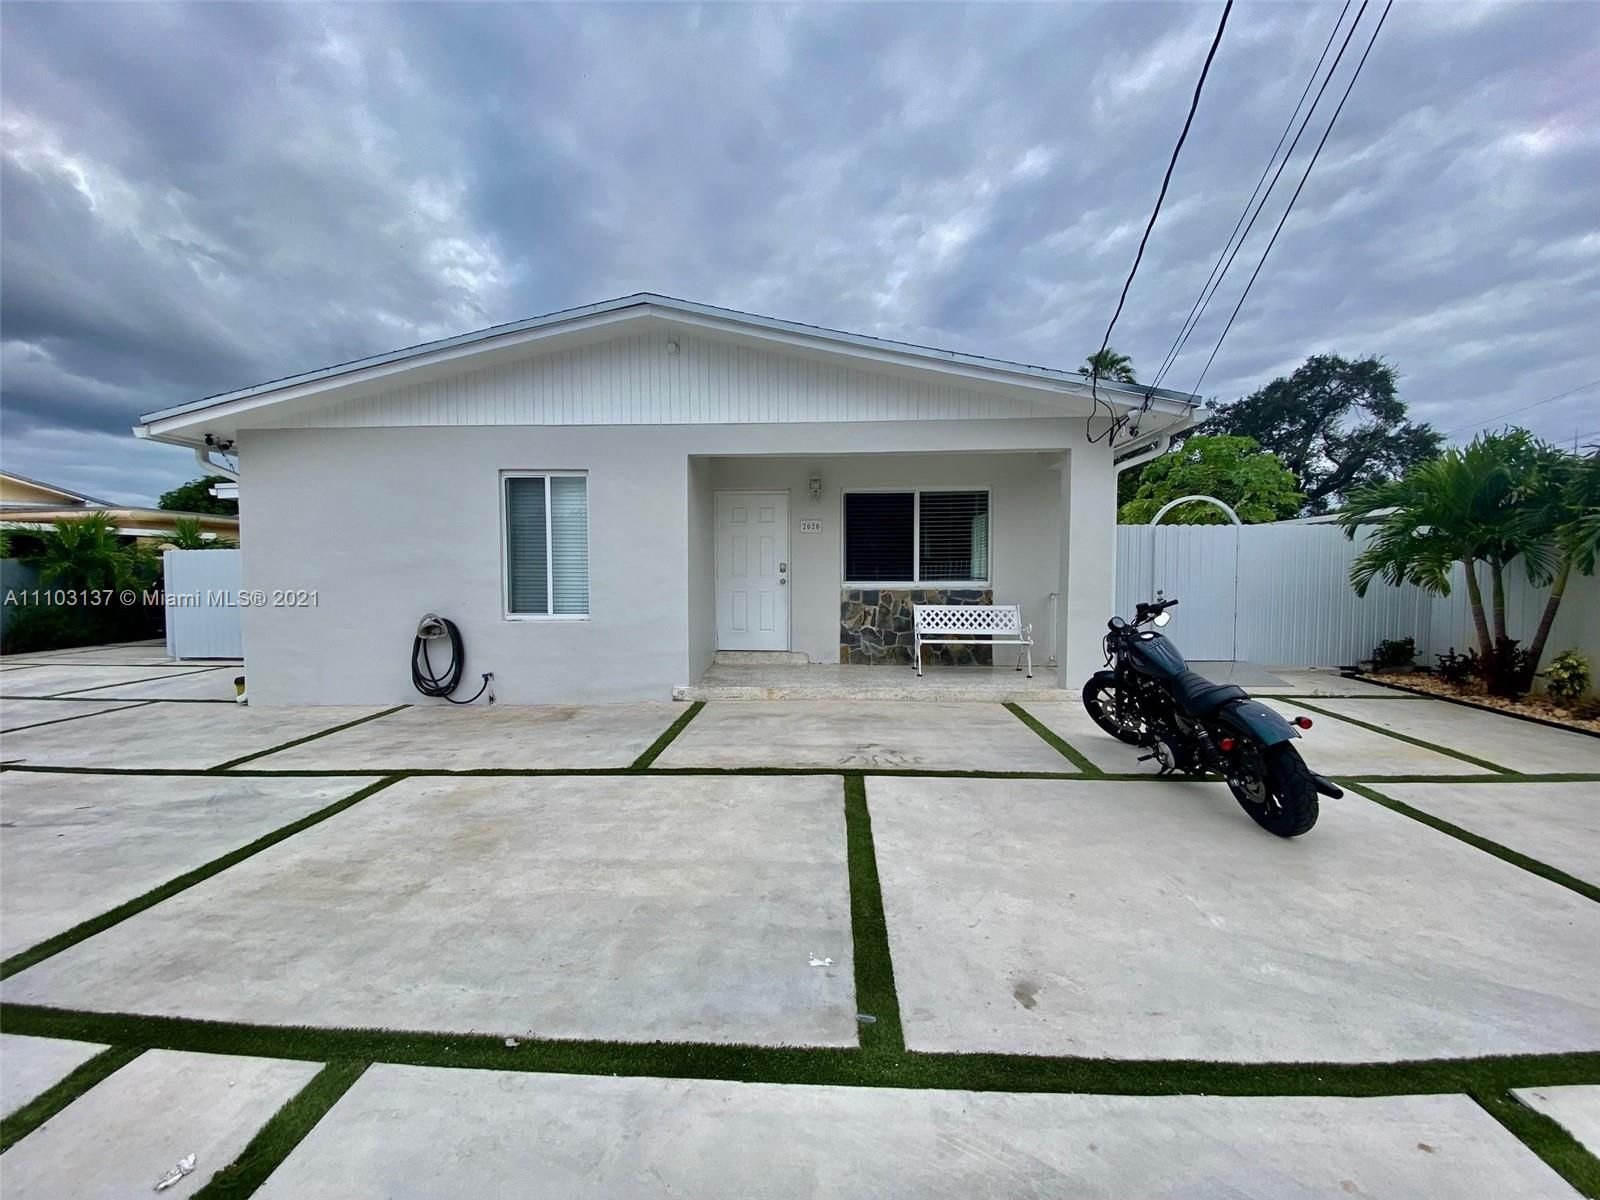 Real estate property located at 2020 105th St, Miami-Dade County, Miami, FL